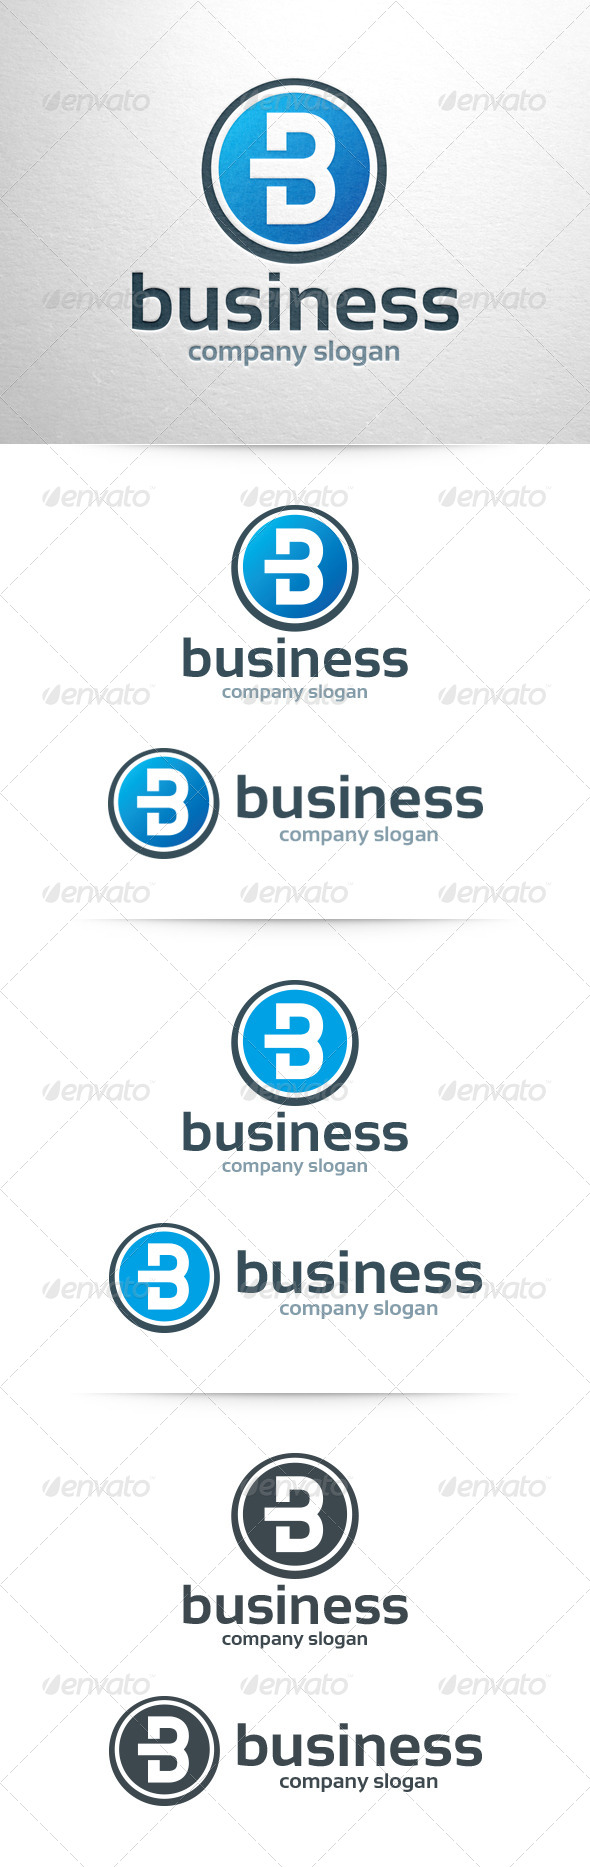 B Letter Logo Template photo - 1